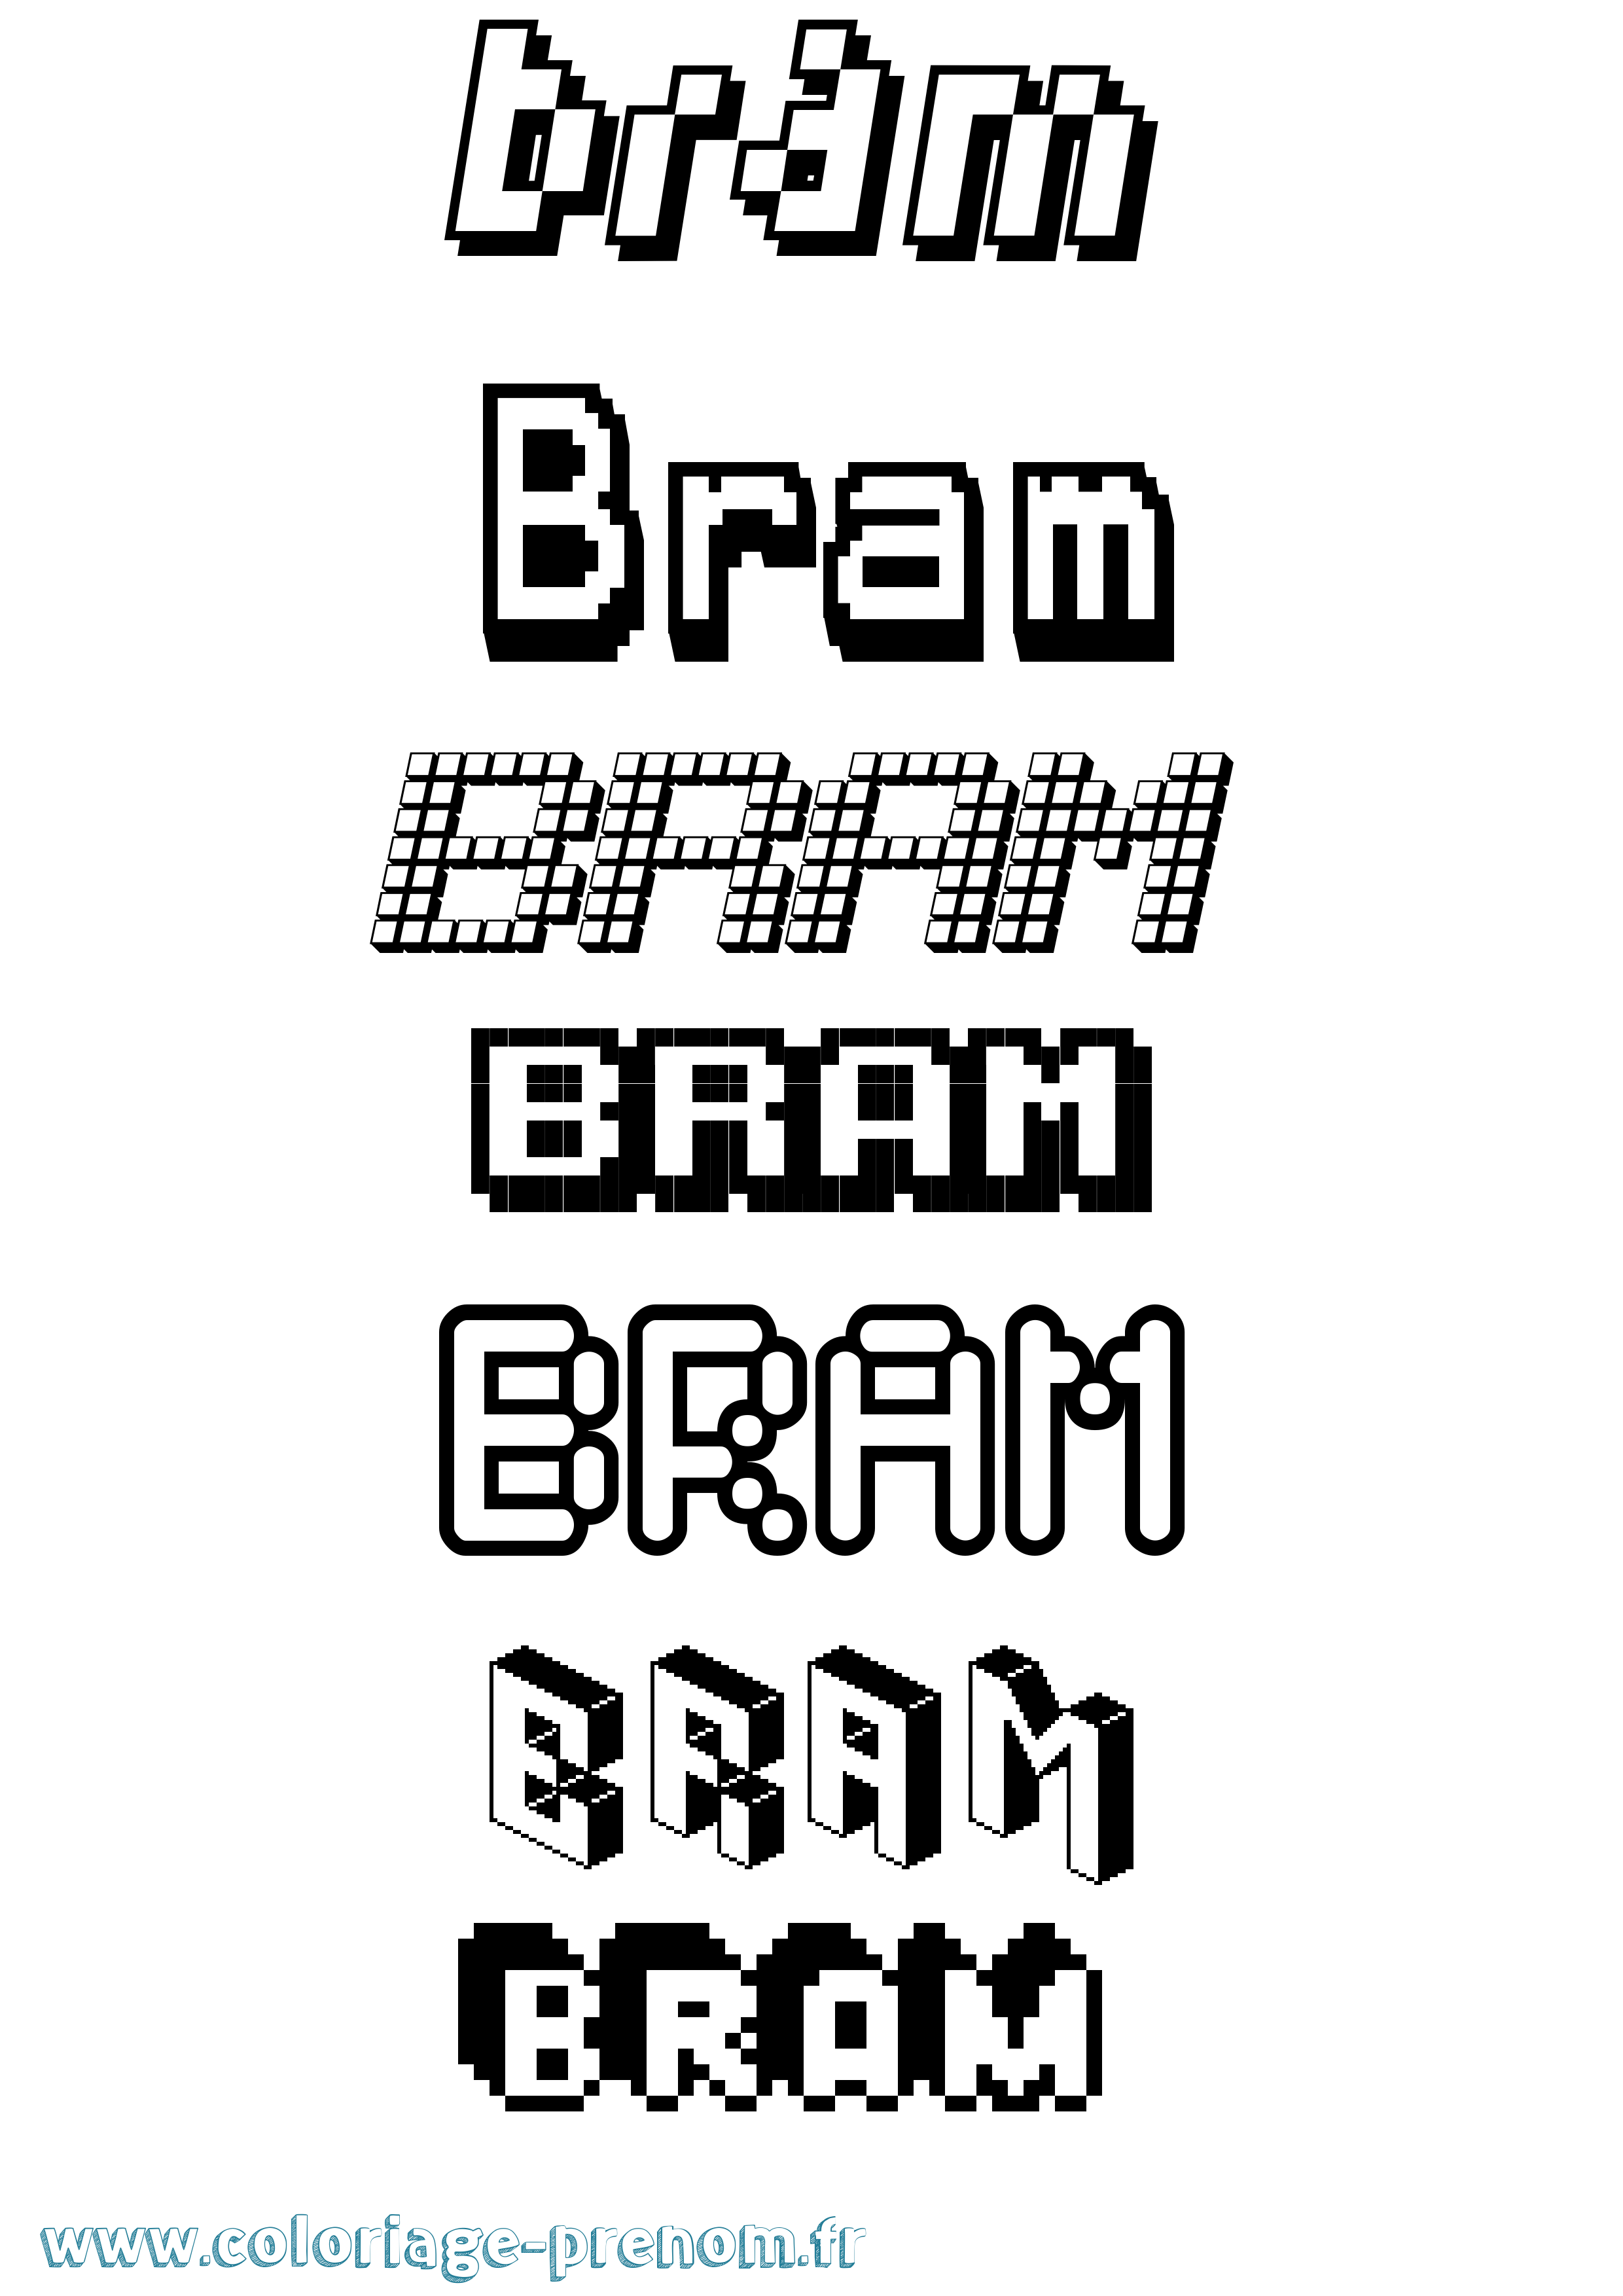 Coloriage prénom Bram Pixel